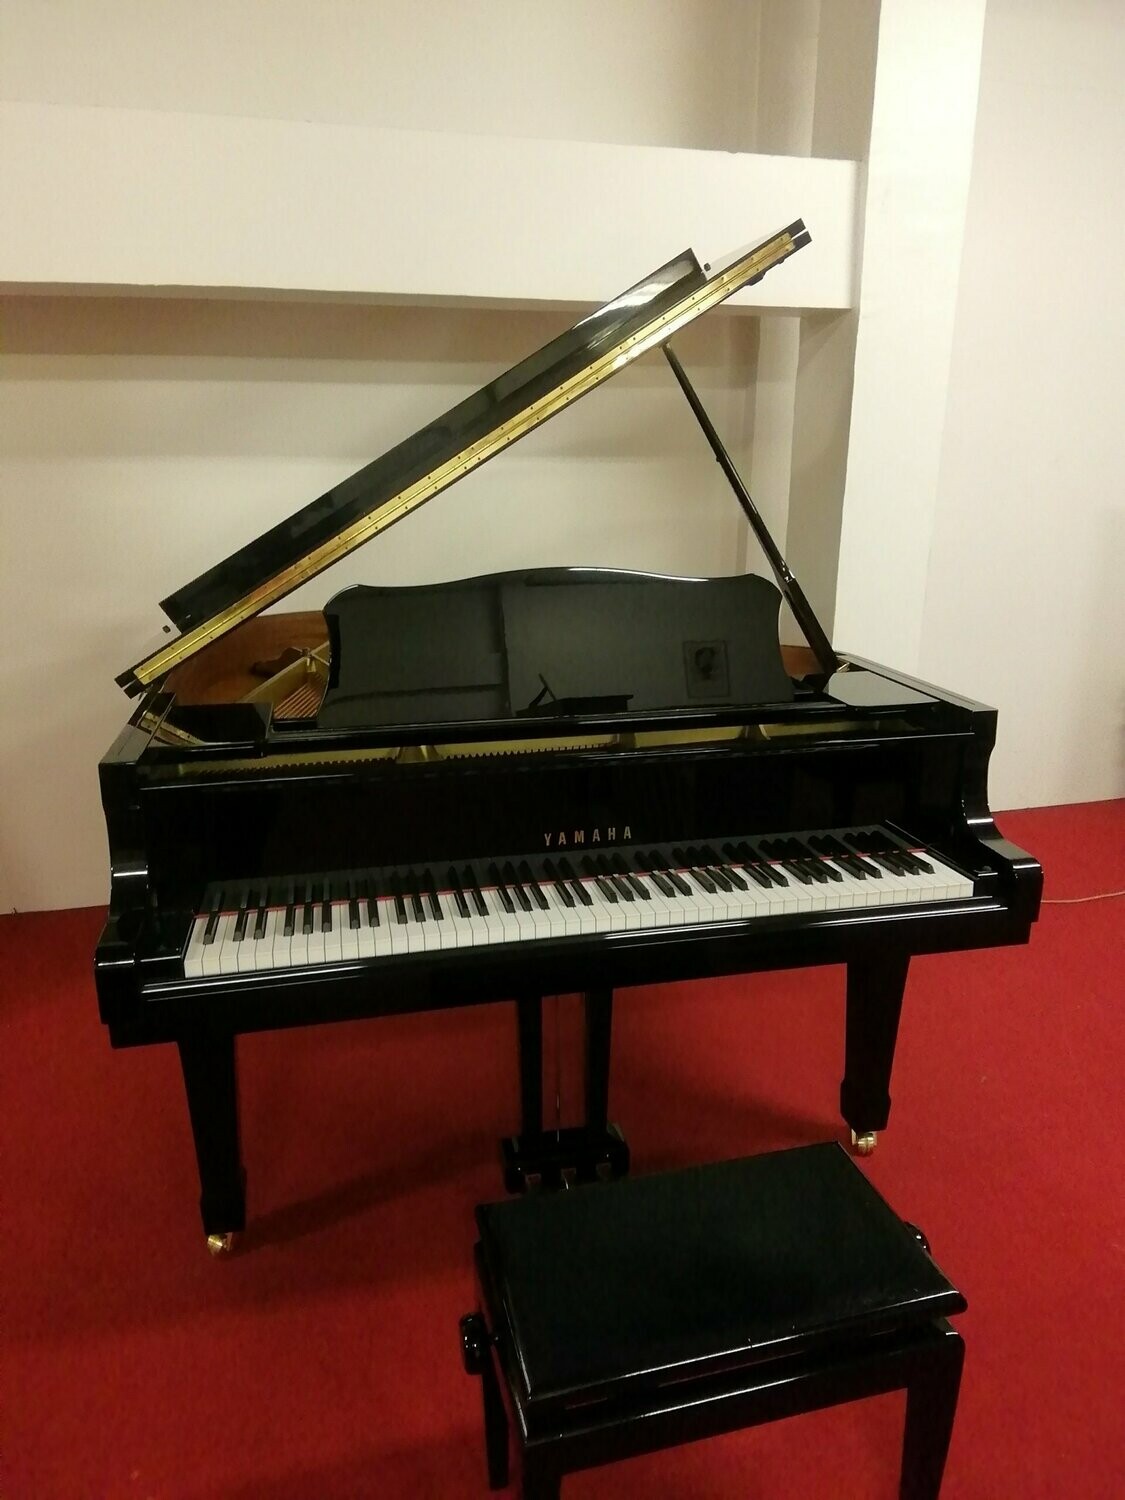 Piano quart de queue Yamaha G1 d'occasion à Massy (91)